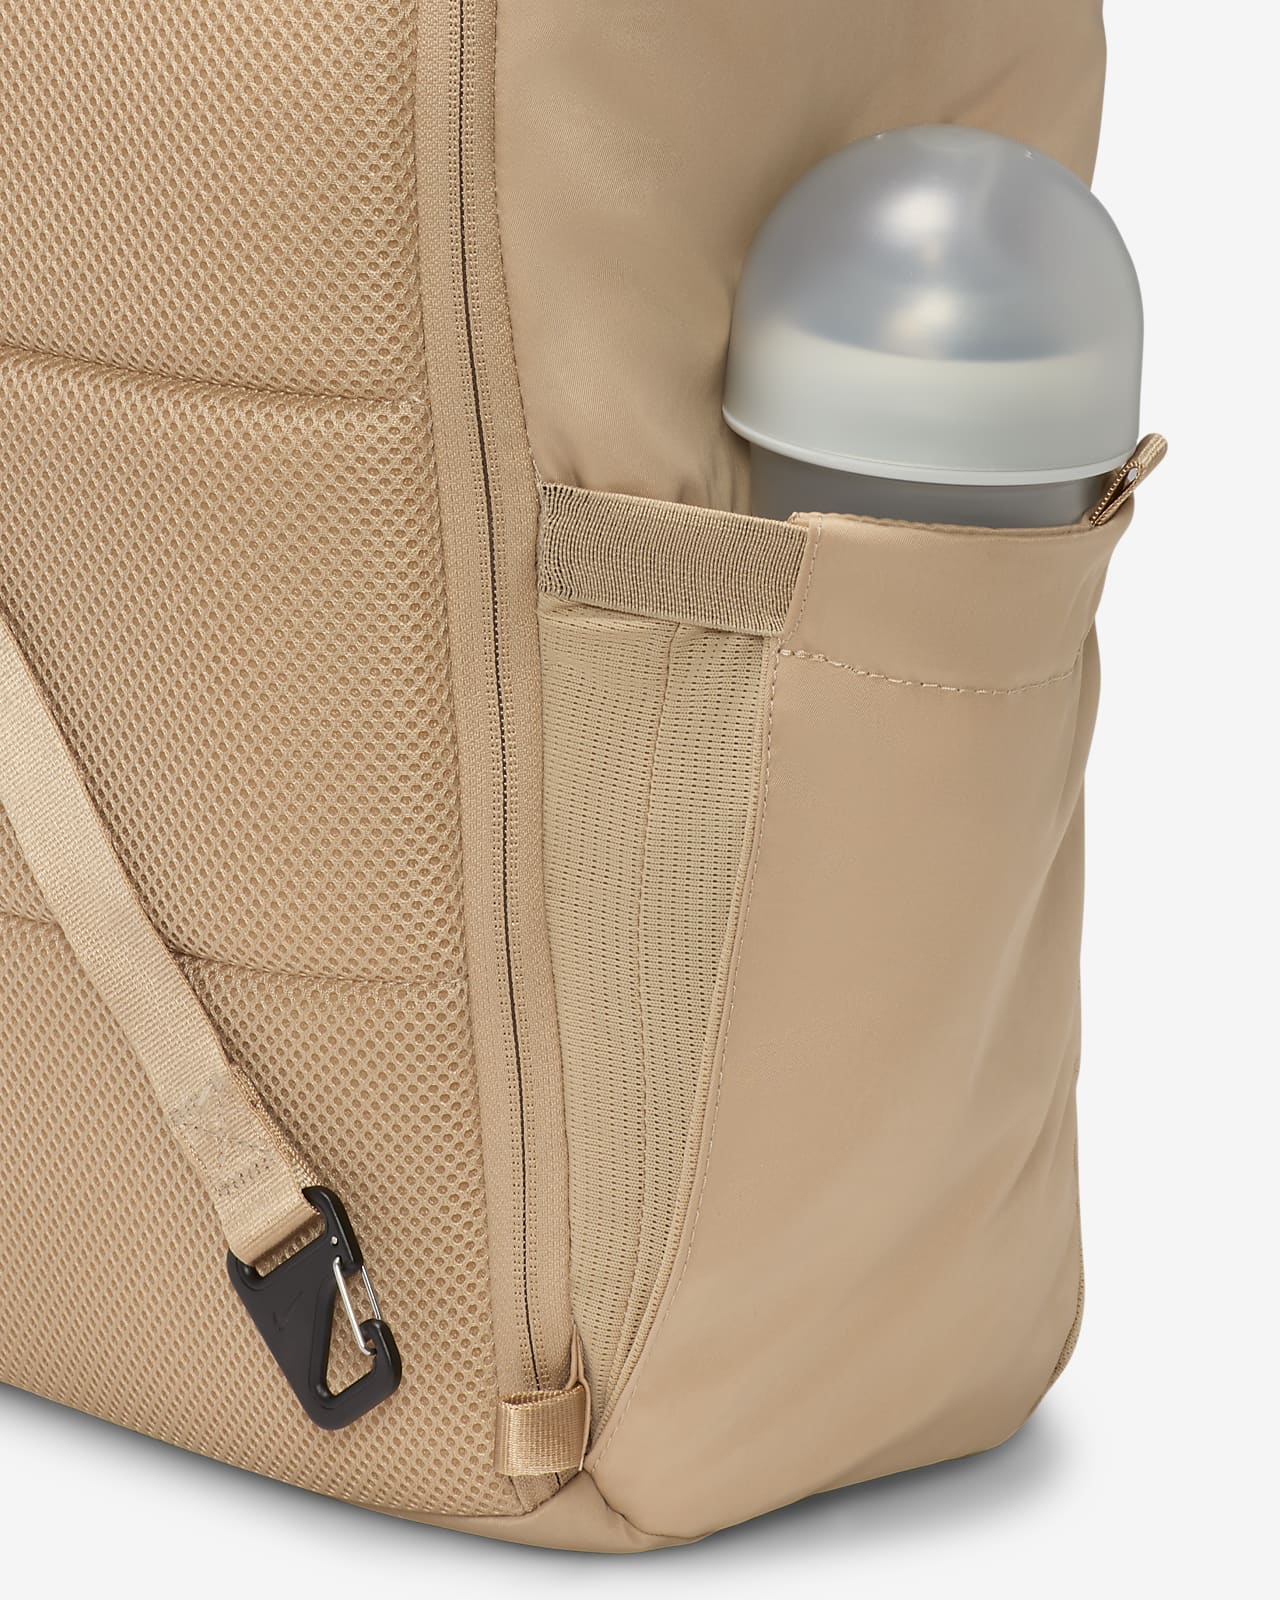 Navy Blue Backpack - A Stylish Diaper Bag for Modern Parents! – Momkindness